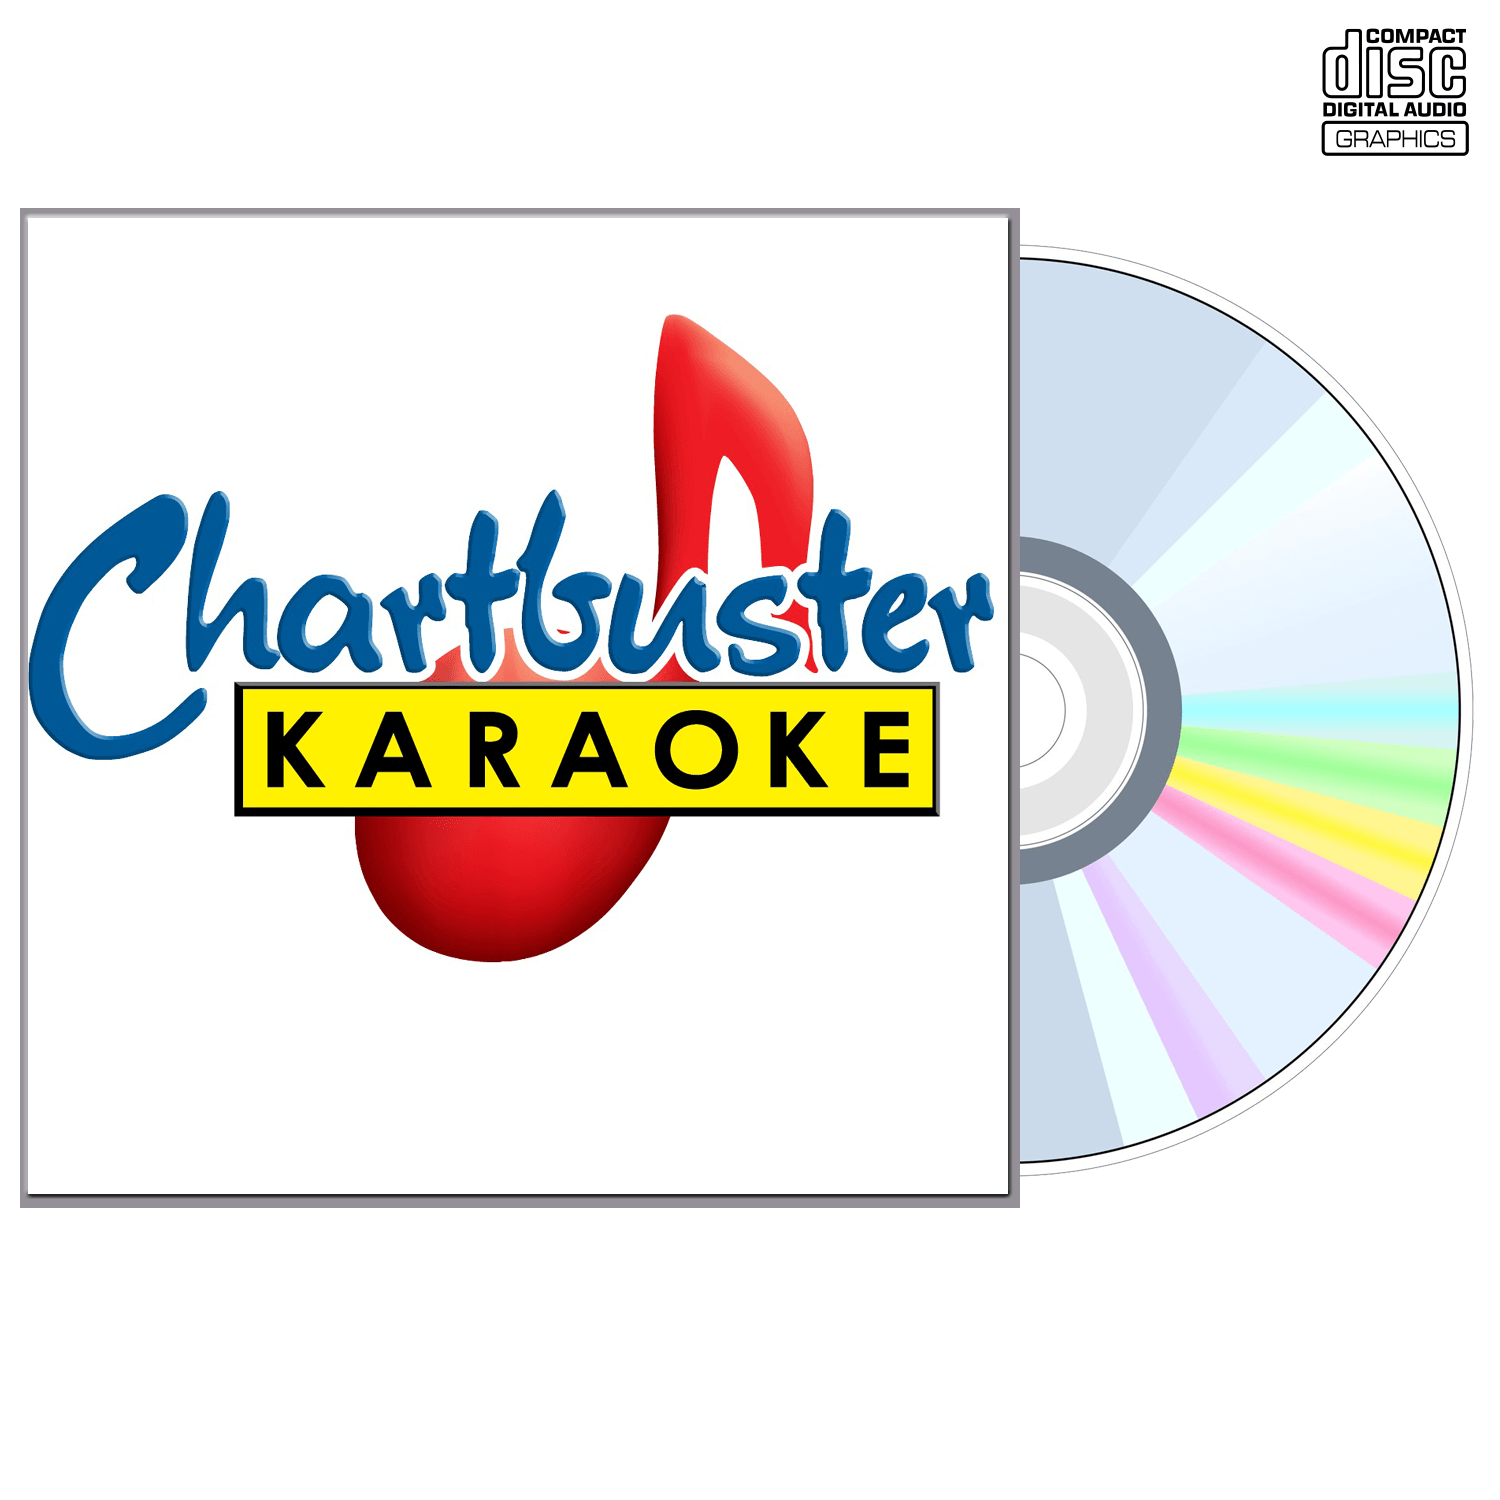 Fergie - CD+G - Chartbuster Karaoke - Karaoke Home Entertainment